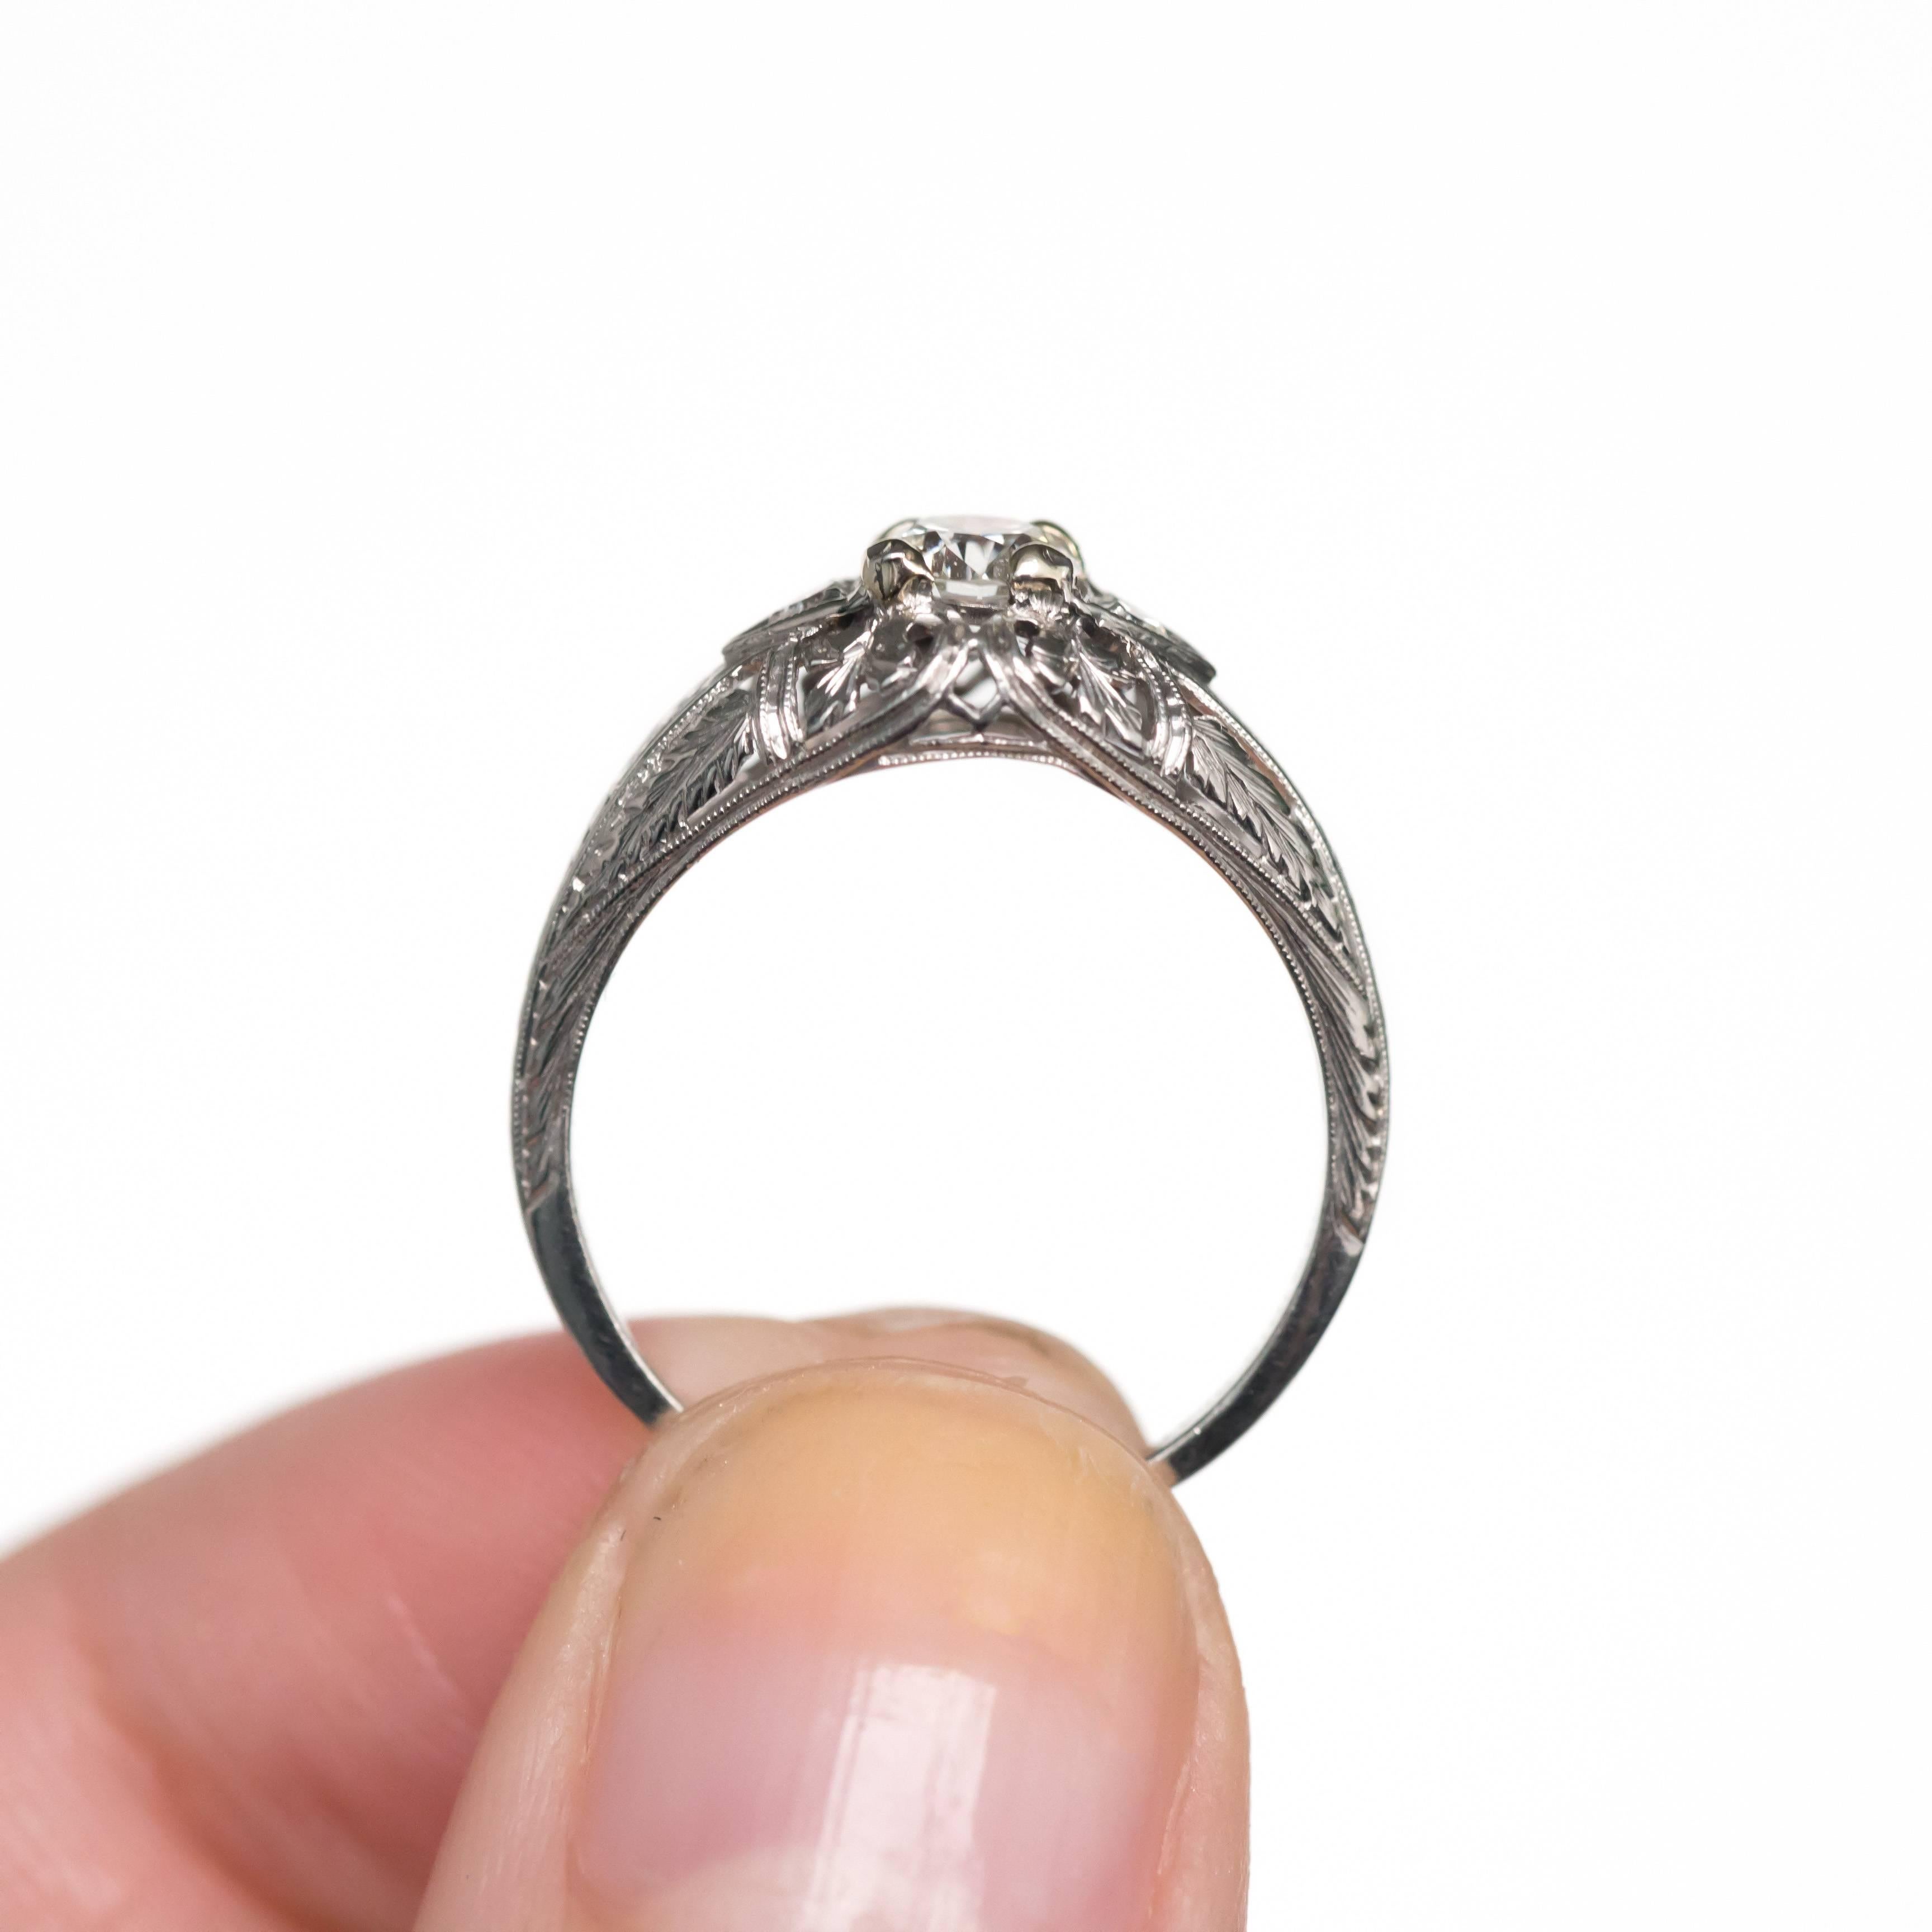 25 carat diamond engagement ring